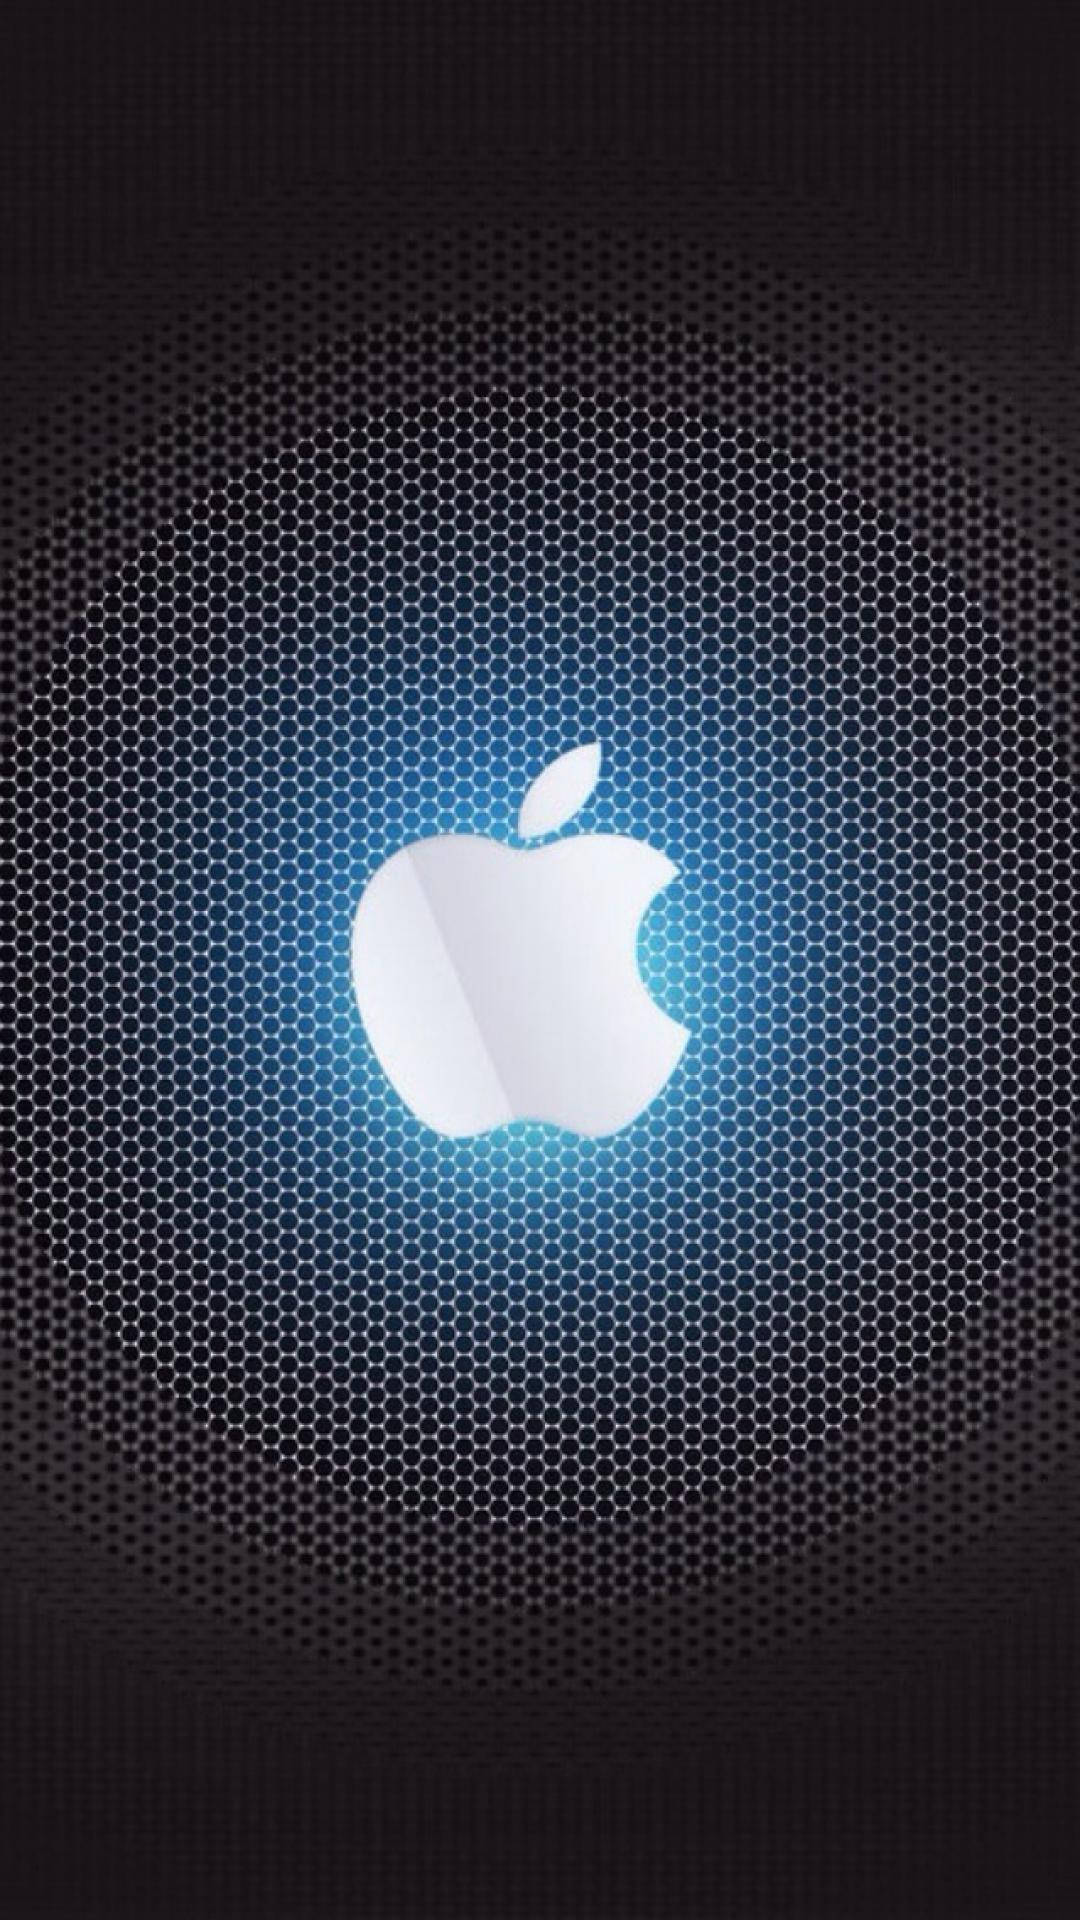 Apple Logo 4k In Digital Form Wallpaper